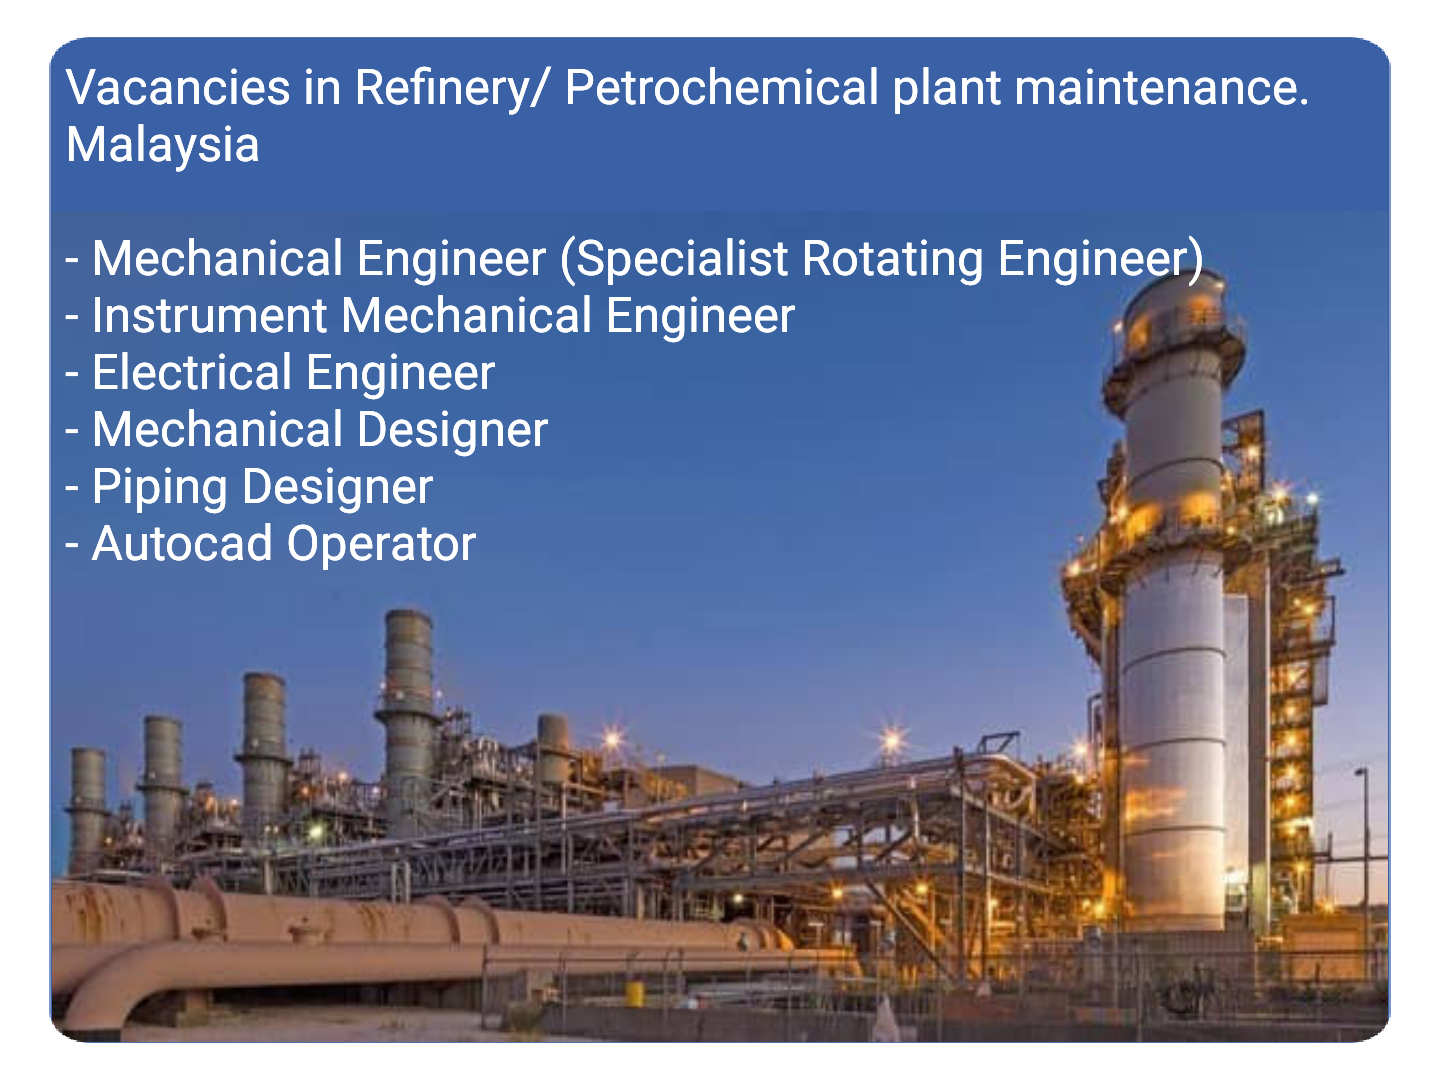 Refinery Petrochemical Plant Maintenance Jobs